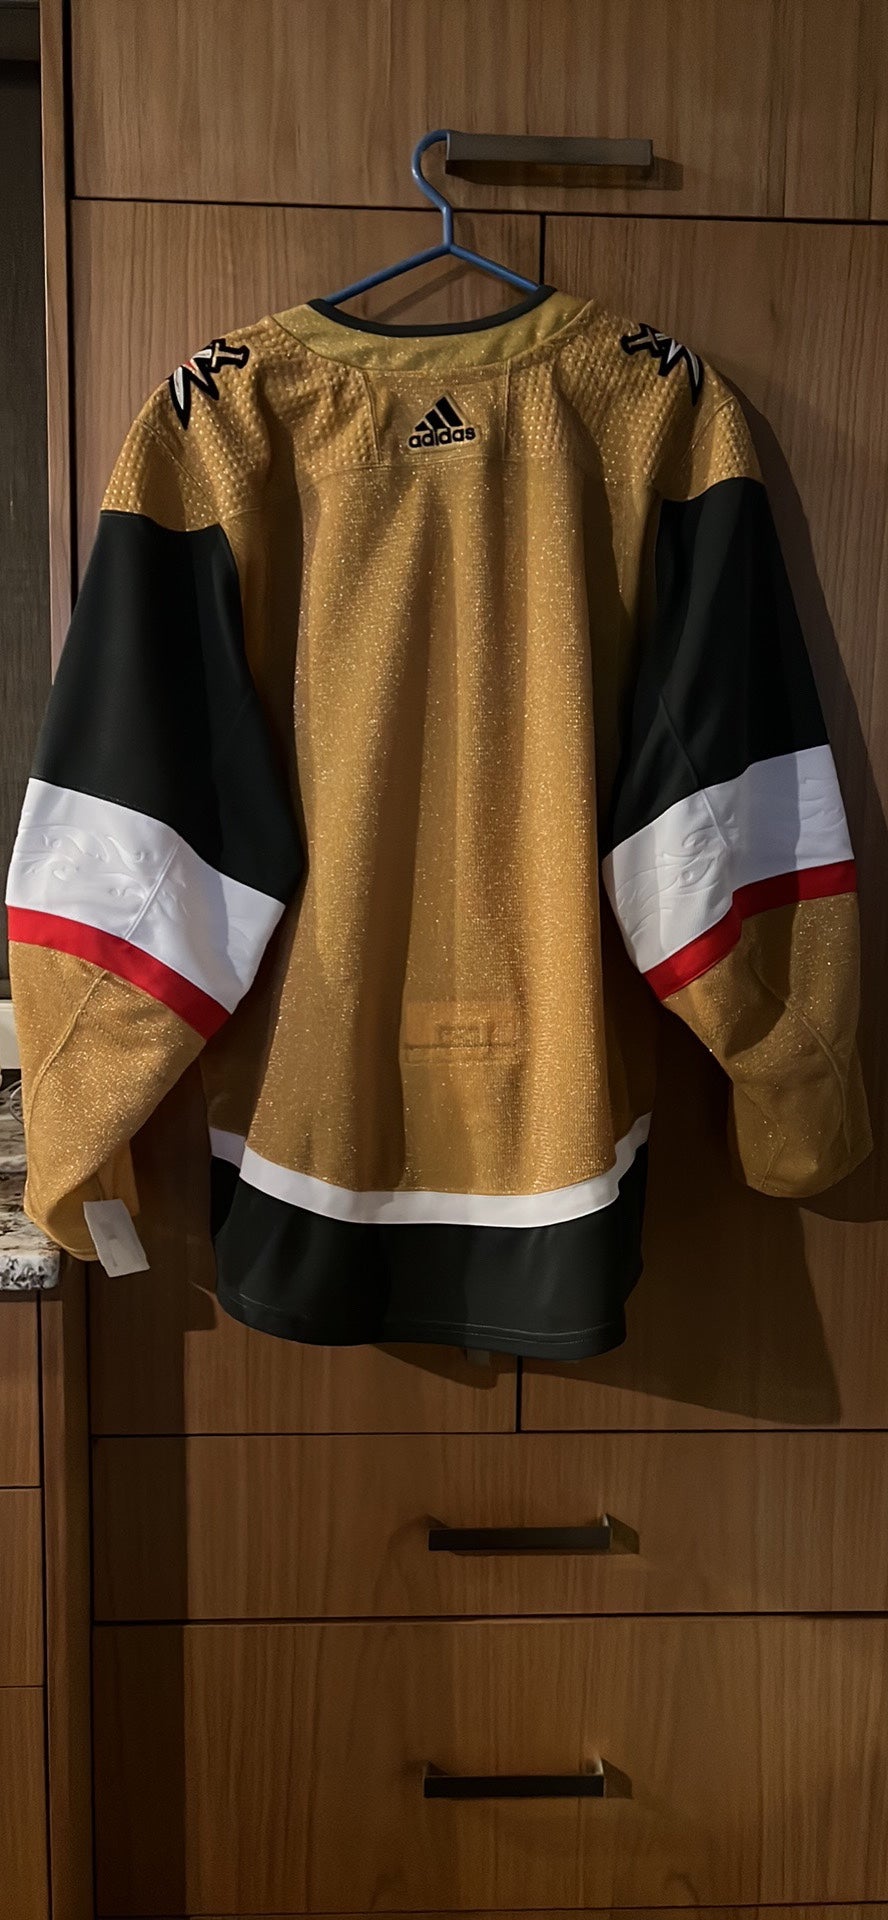 Vegas Golden Knights Announce Circa Sports Ad on Sweaters Next Season –  SportsLogos.Net News